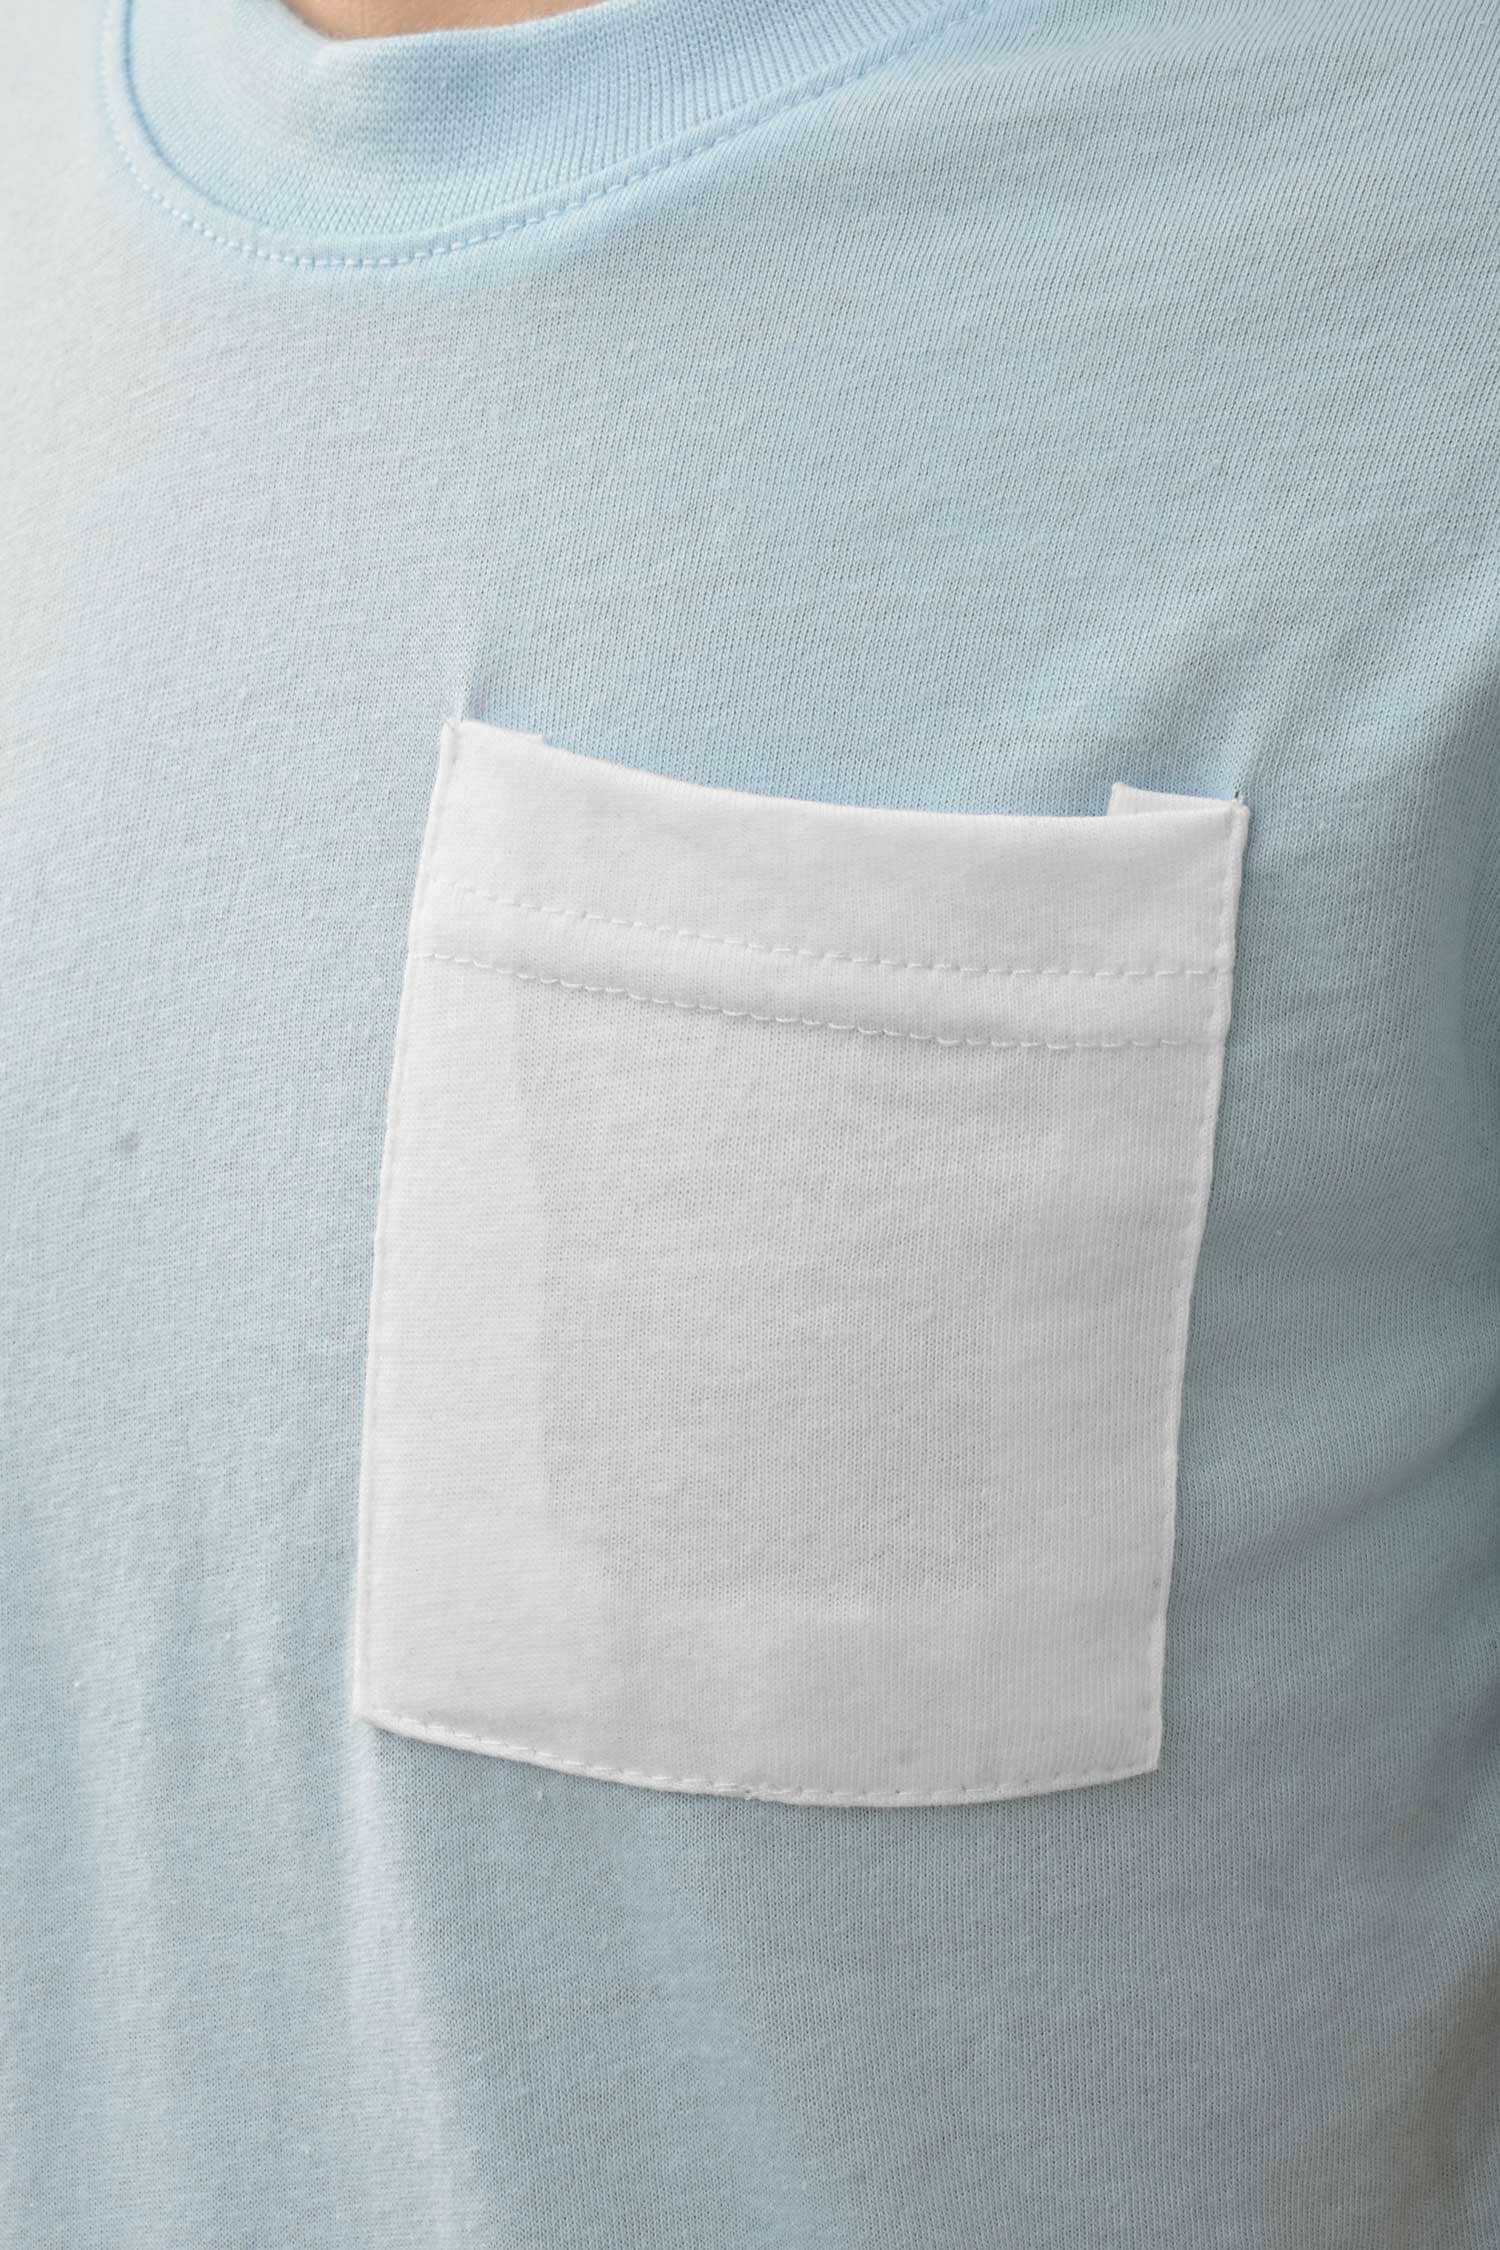 Polo Republica Kid's Contrast Pocket Panel Minor Fault Tee Shirt